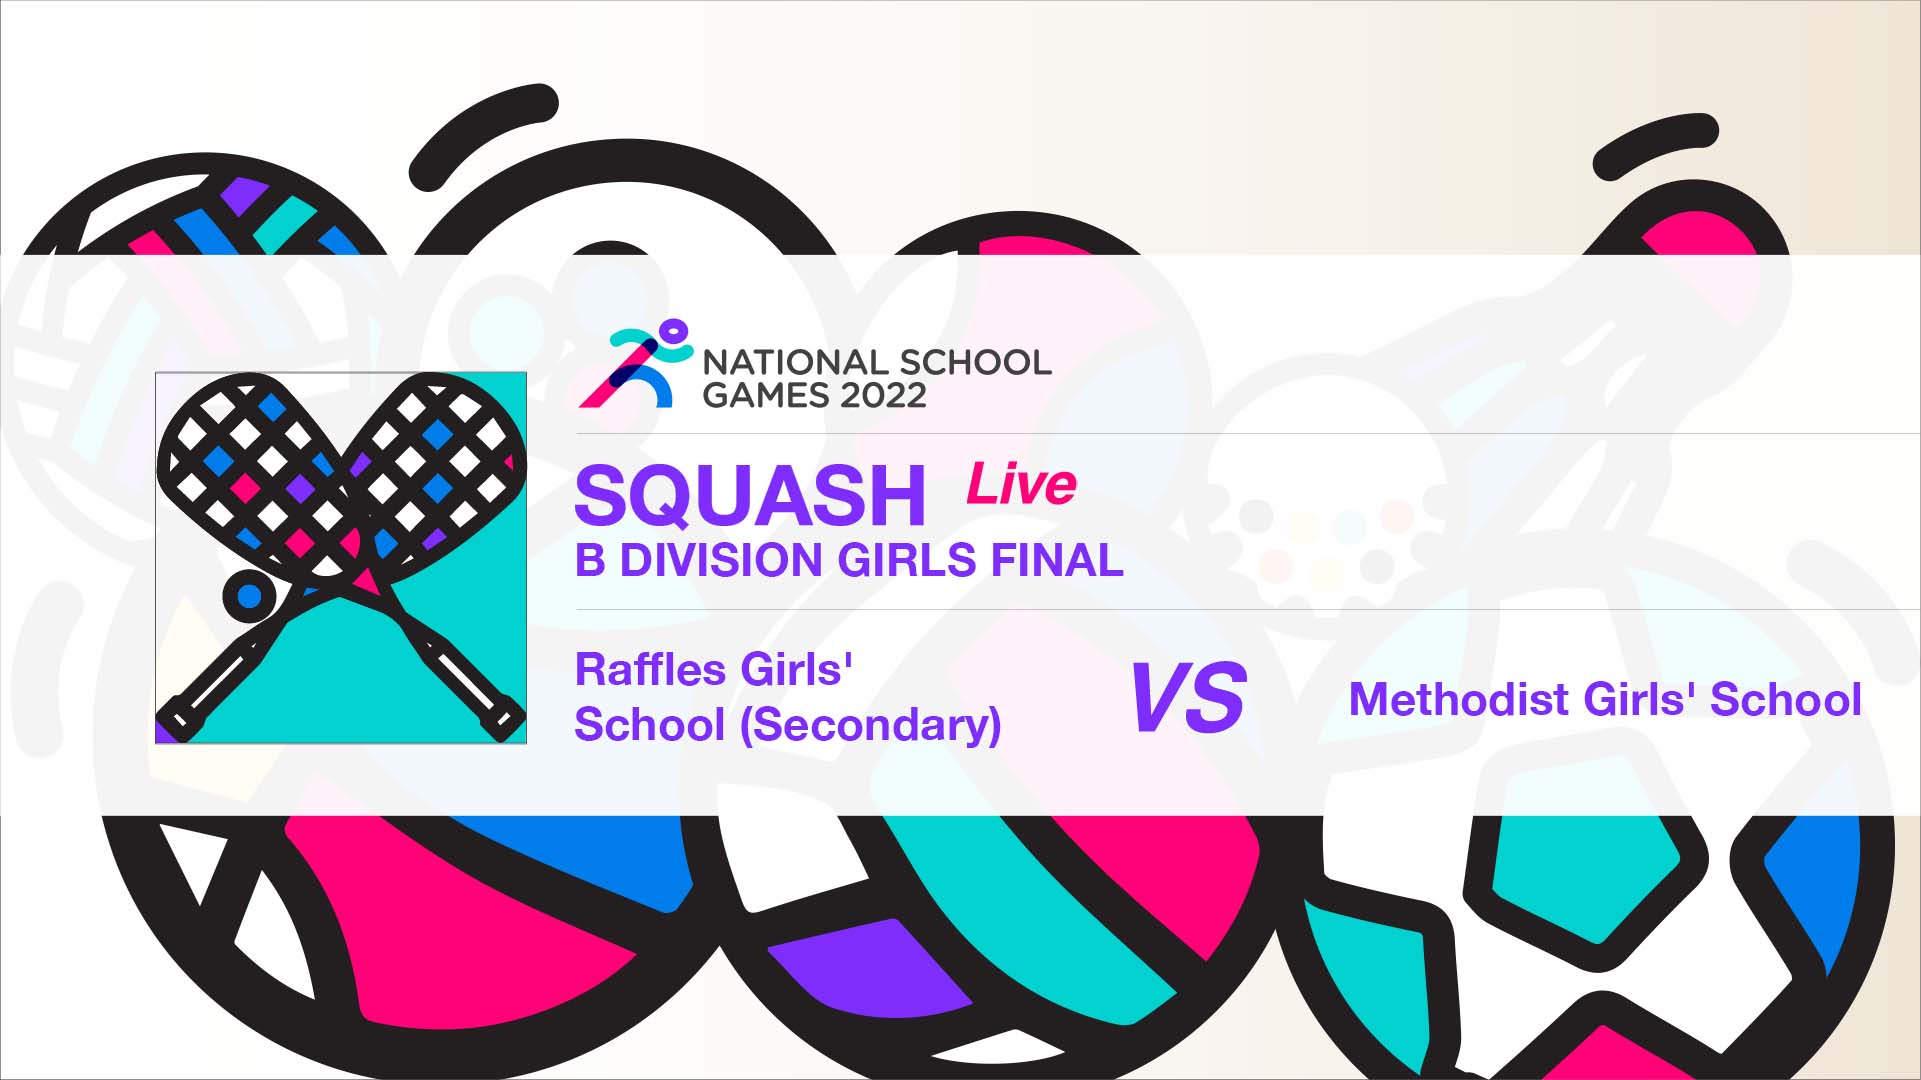 SSSC Squash B Division Girls Final | Raffles Girls' School (Secondary) vs Methodist Girls' School